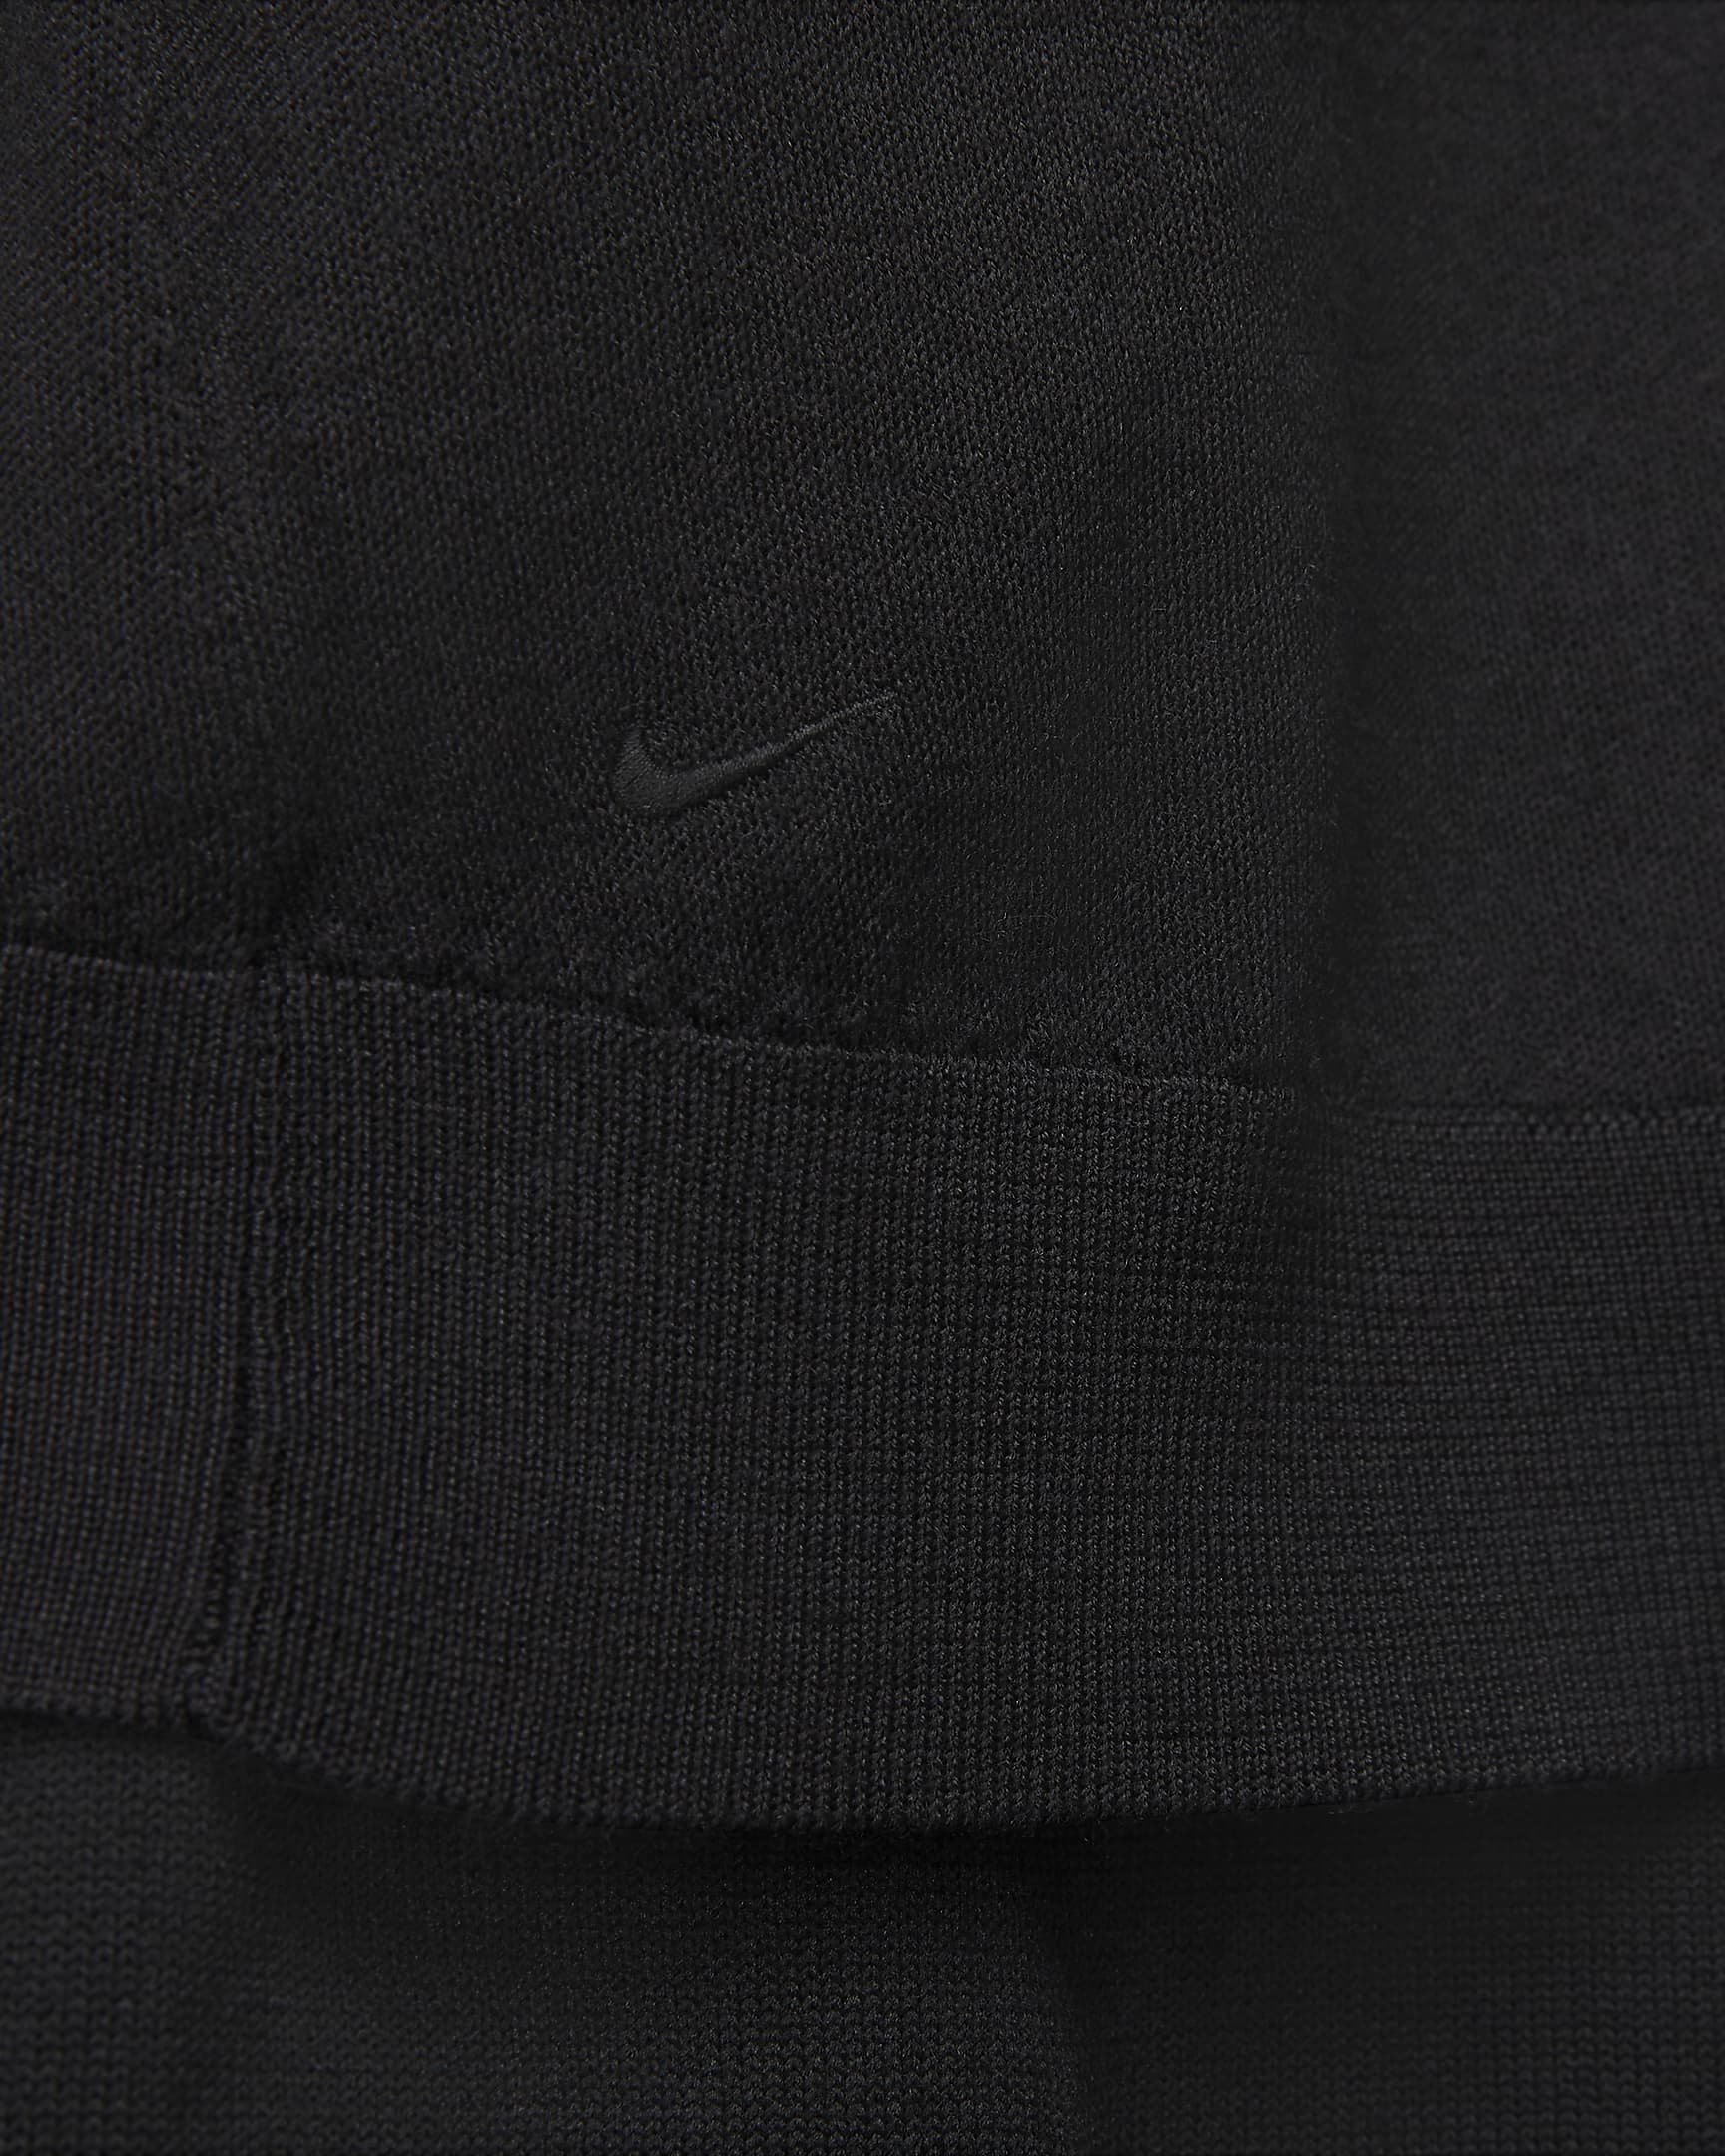 Nike Sportswear Every Stitch Considered Men's Long-Sleeve Knit Polo ...